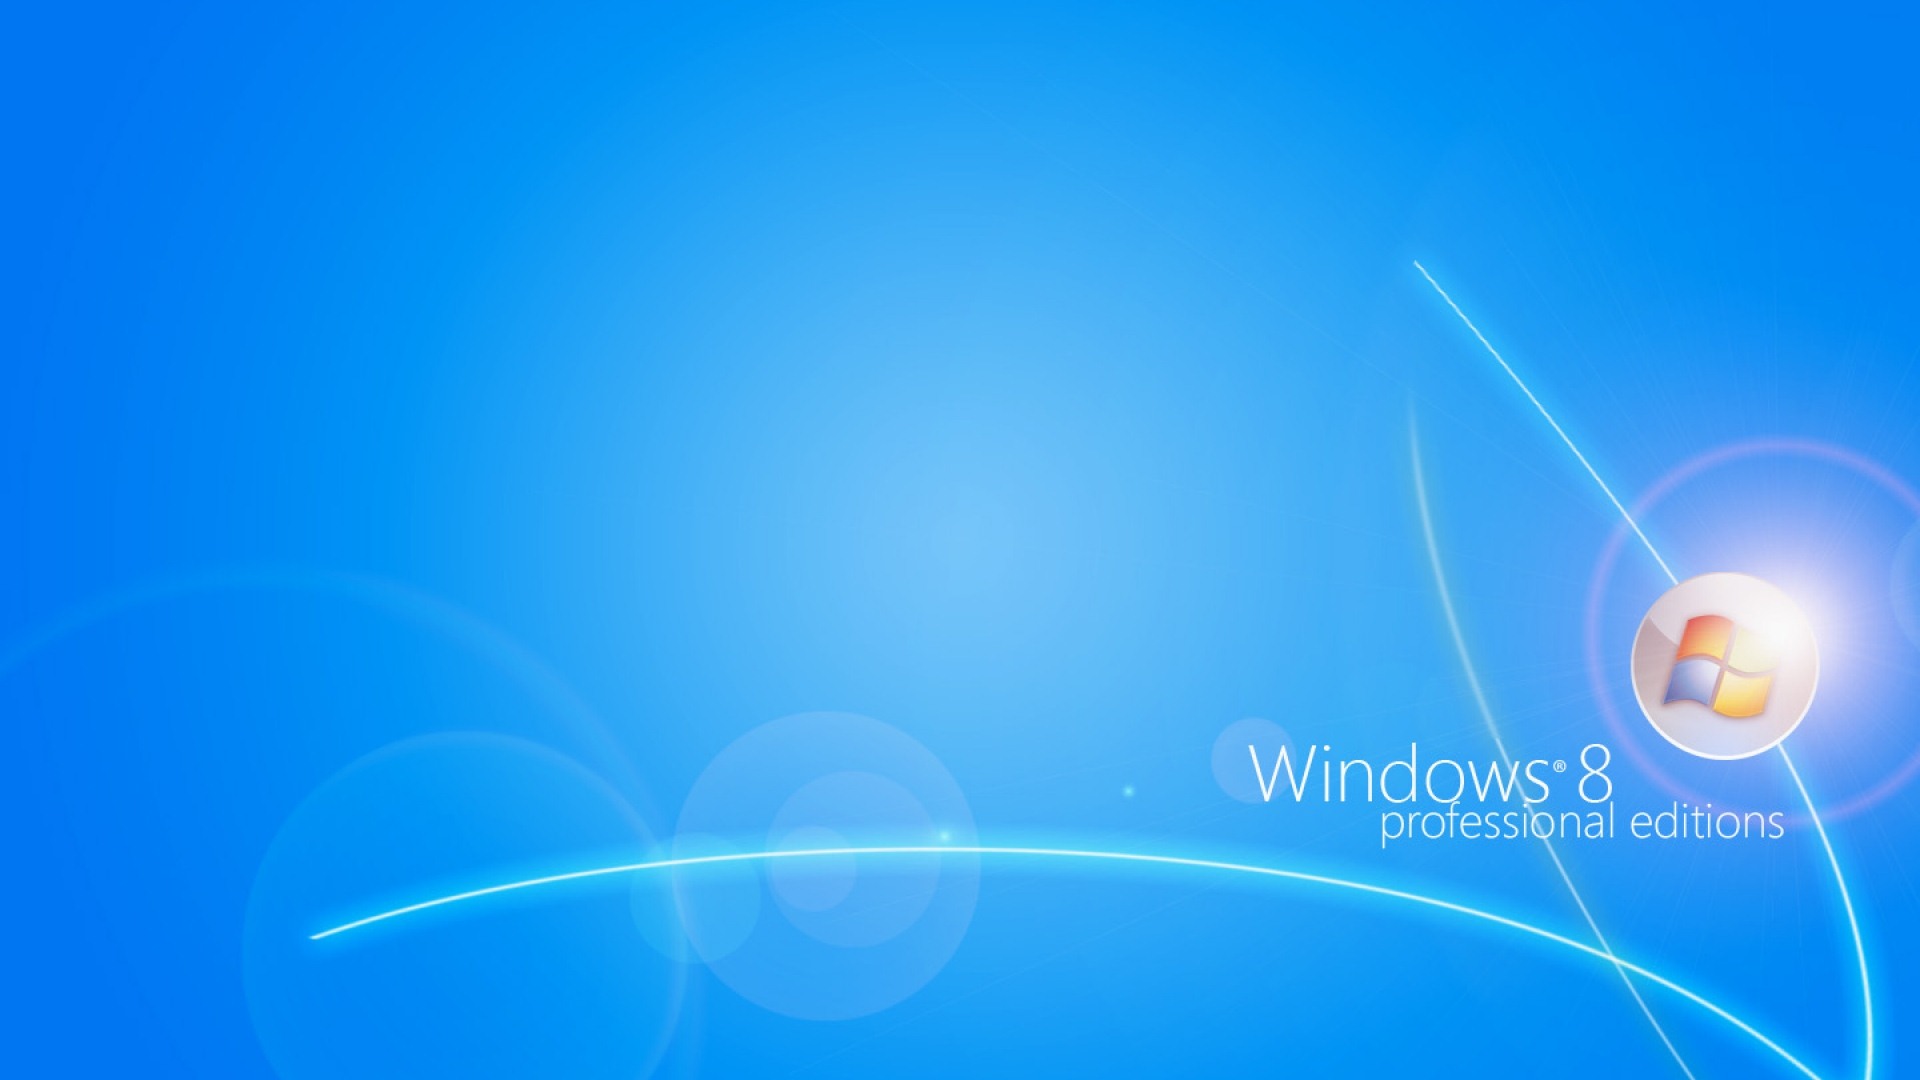 Windows 8 主题壁纸 (二)14 - 1920x1080